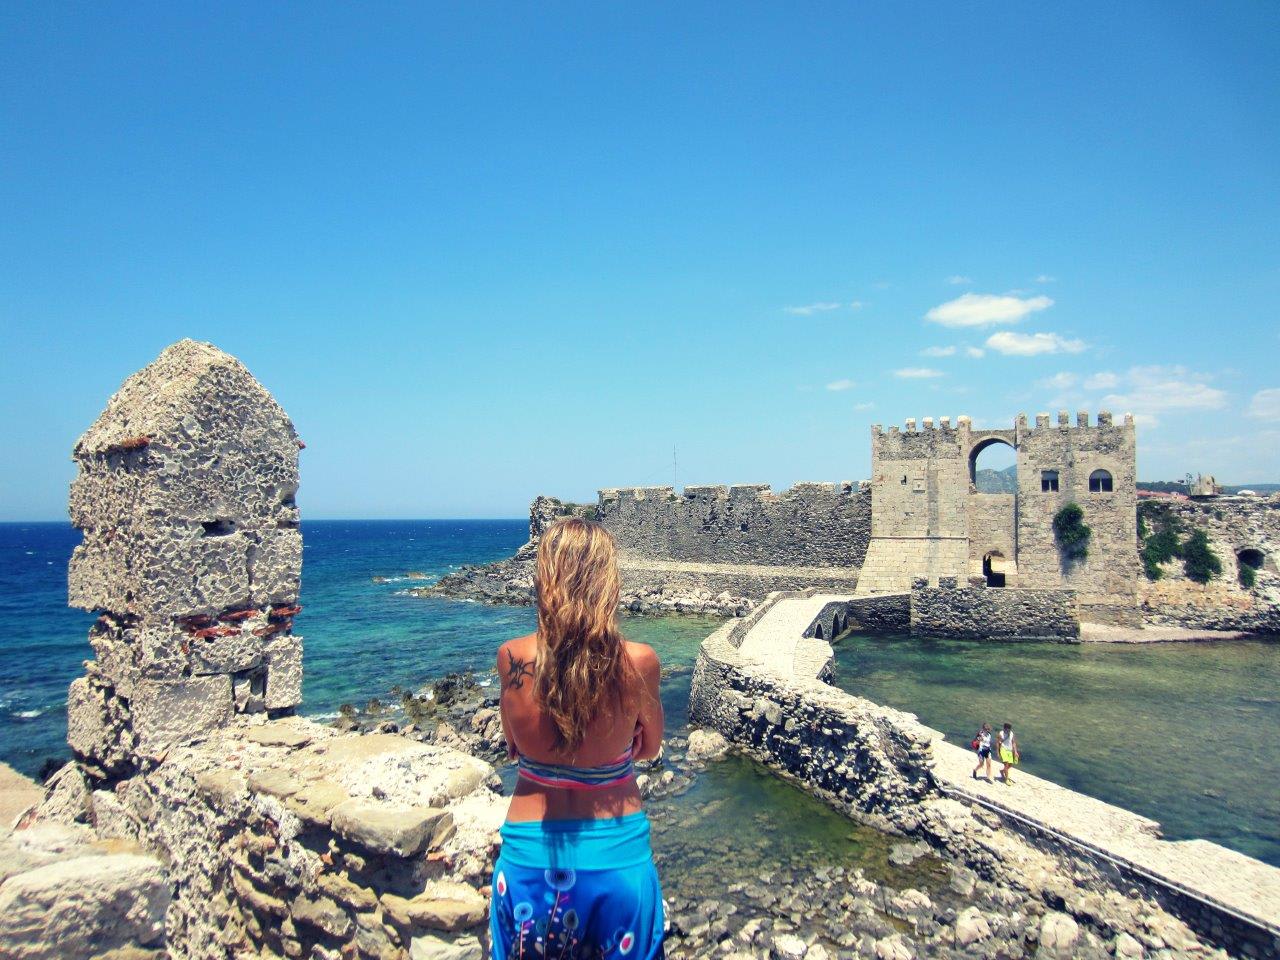 Should I visit mainland Greece, or the islands? -